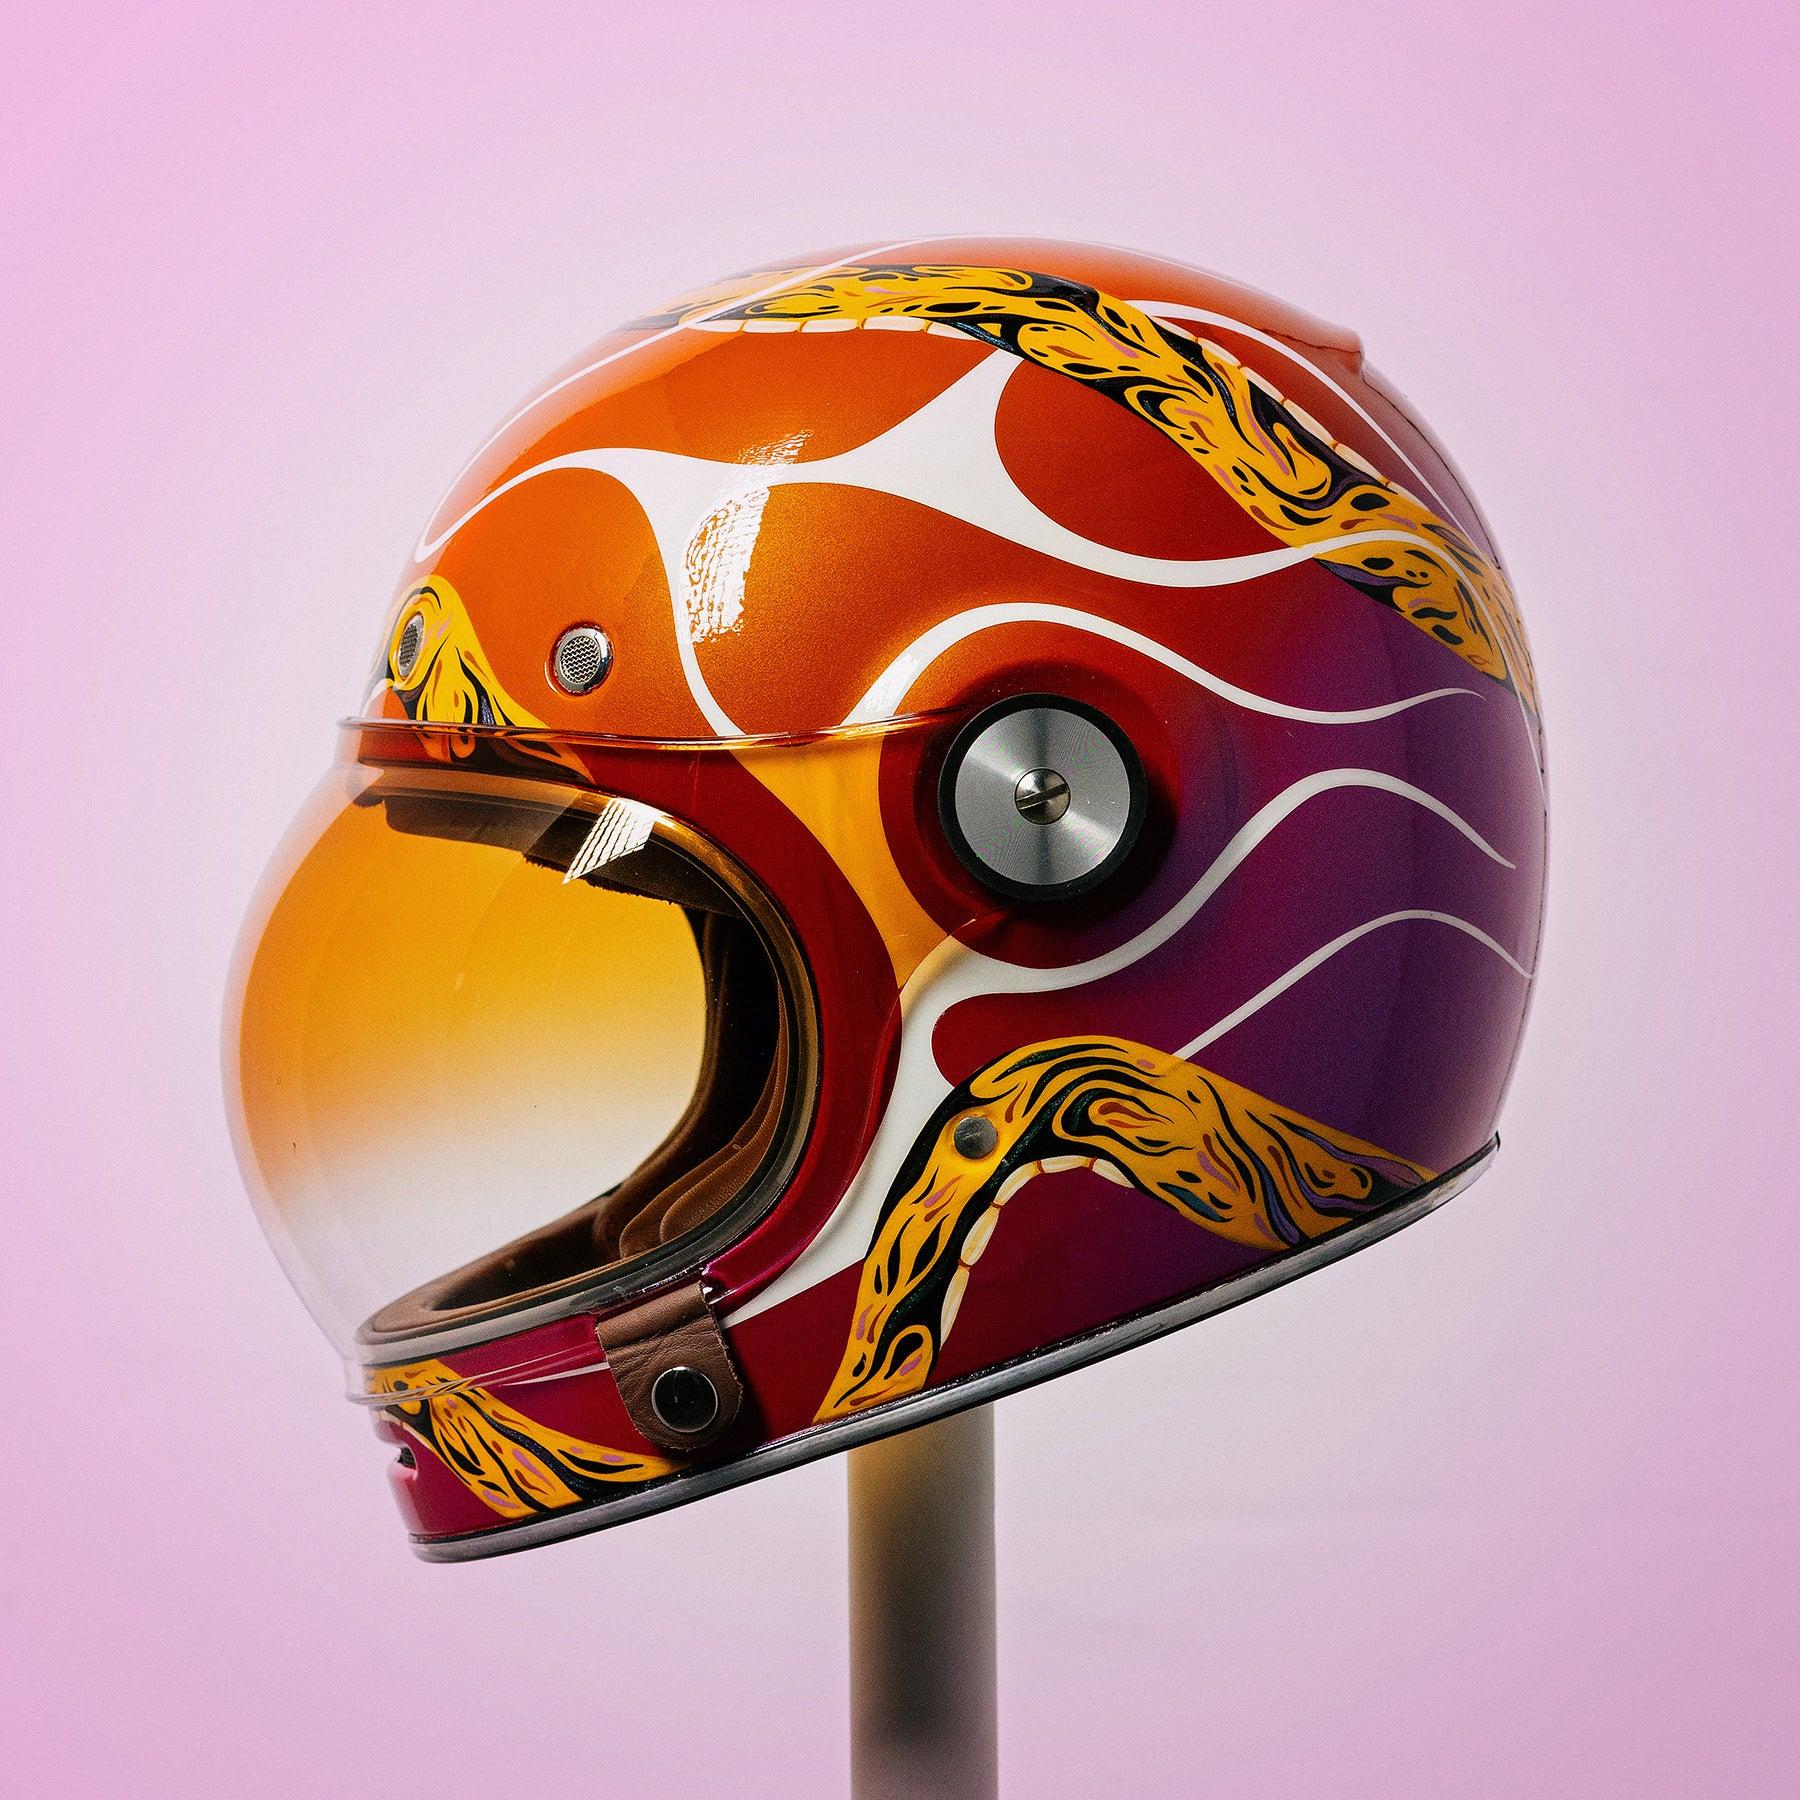 Trippy Ten helmet art show Pittsburgh Glory Daze motorcycle show Bell Helmets Jennie Coulson